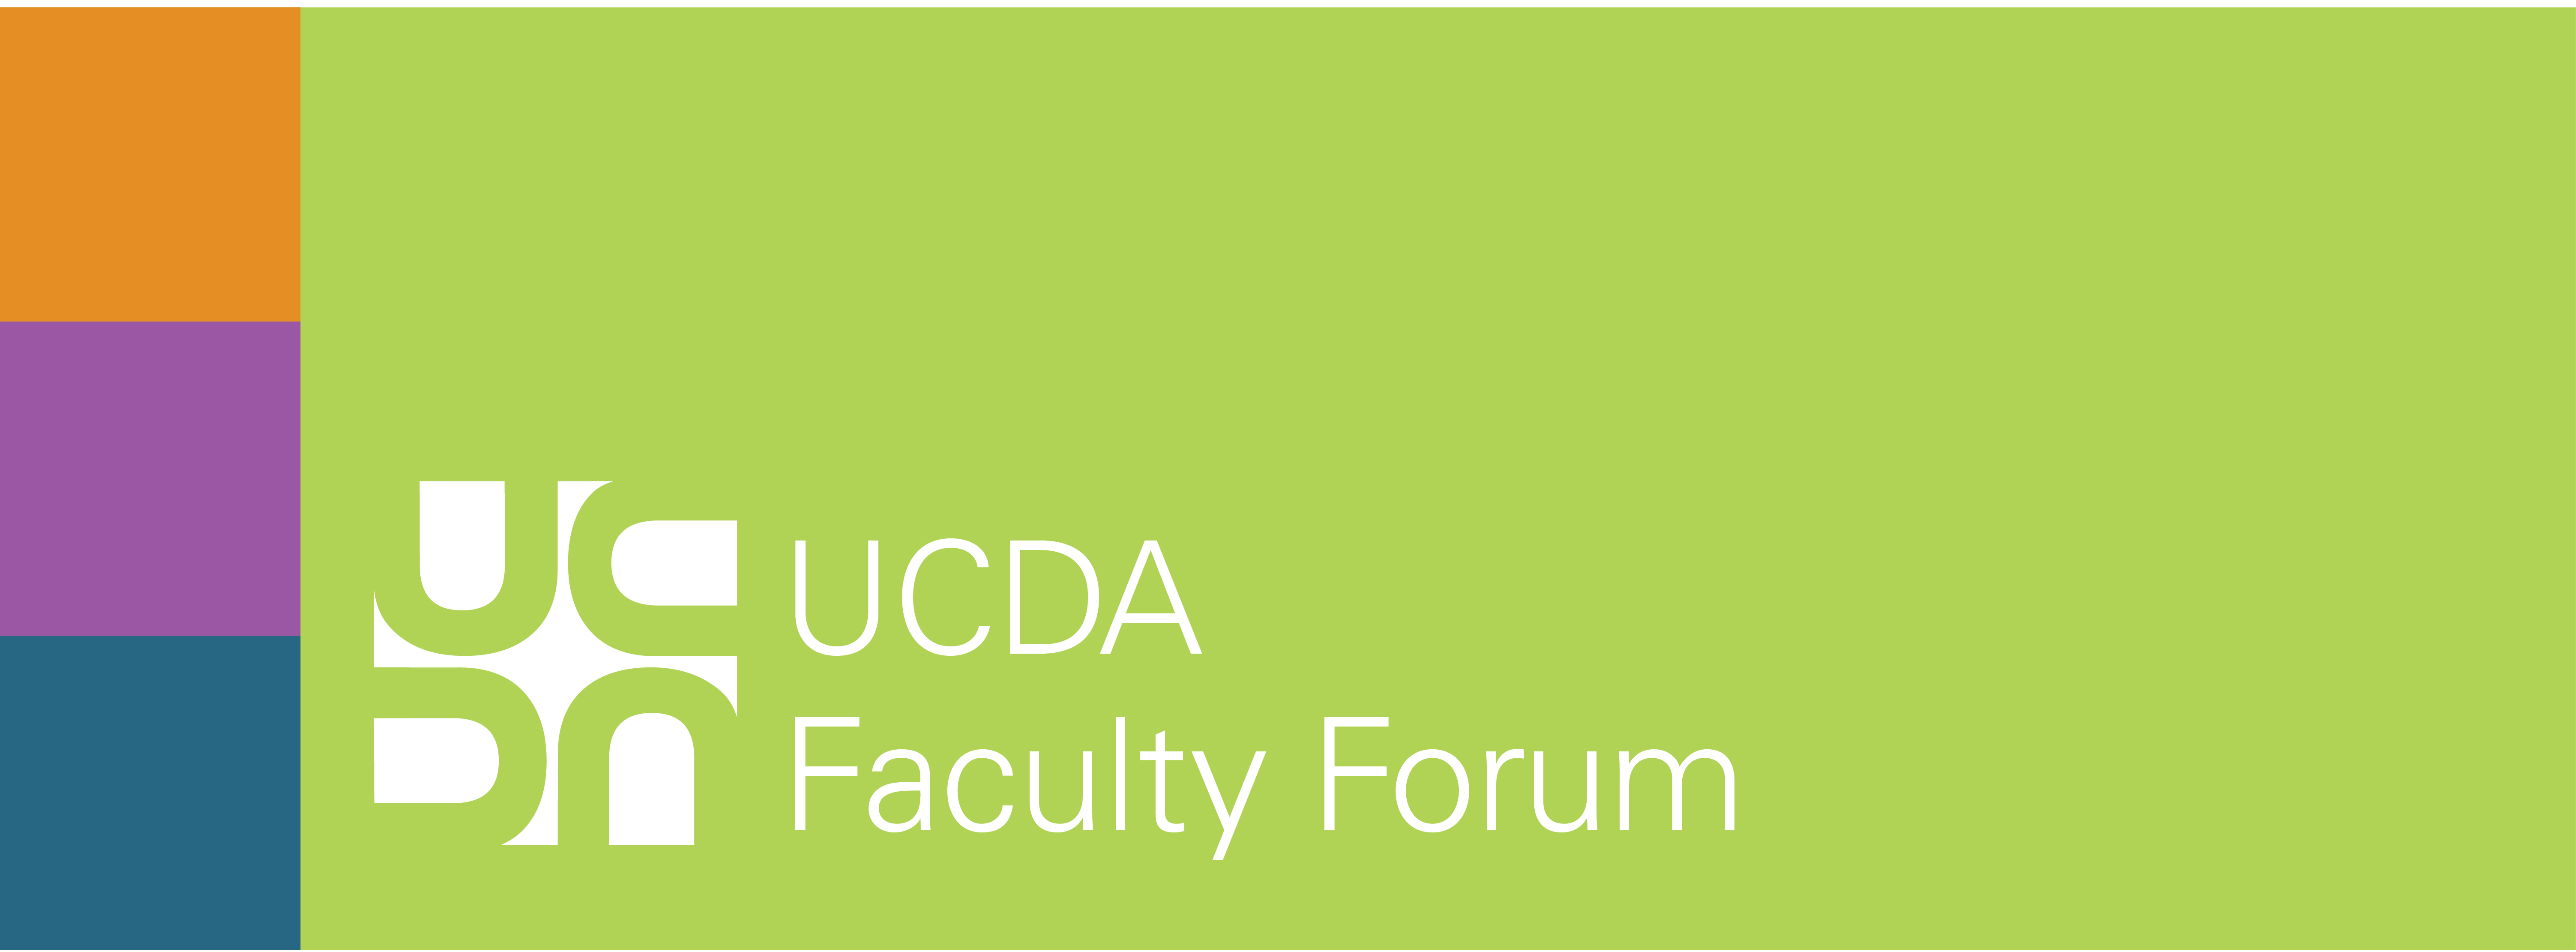 Design Faculty Forum